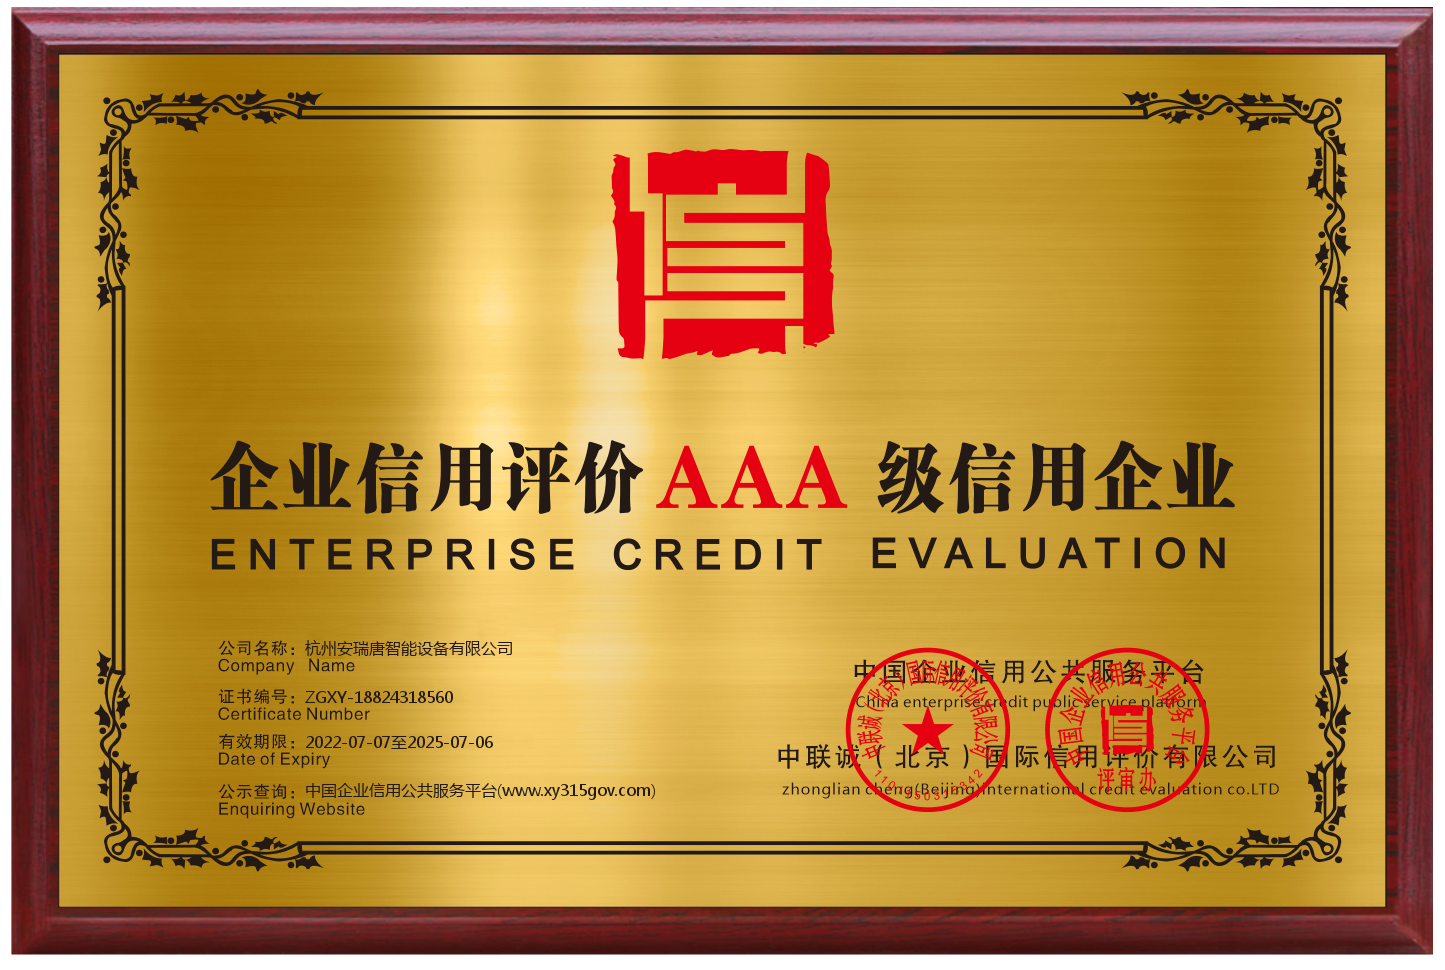 Enterprise Credit Evaluation